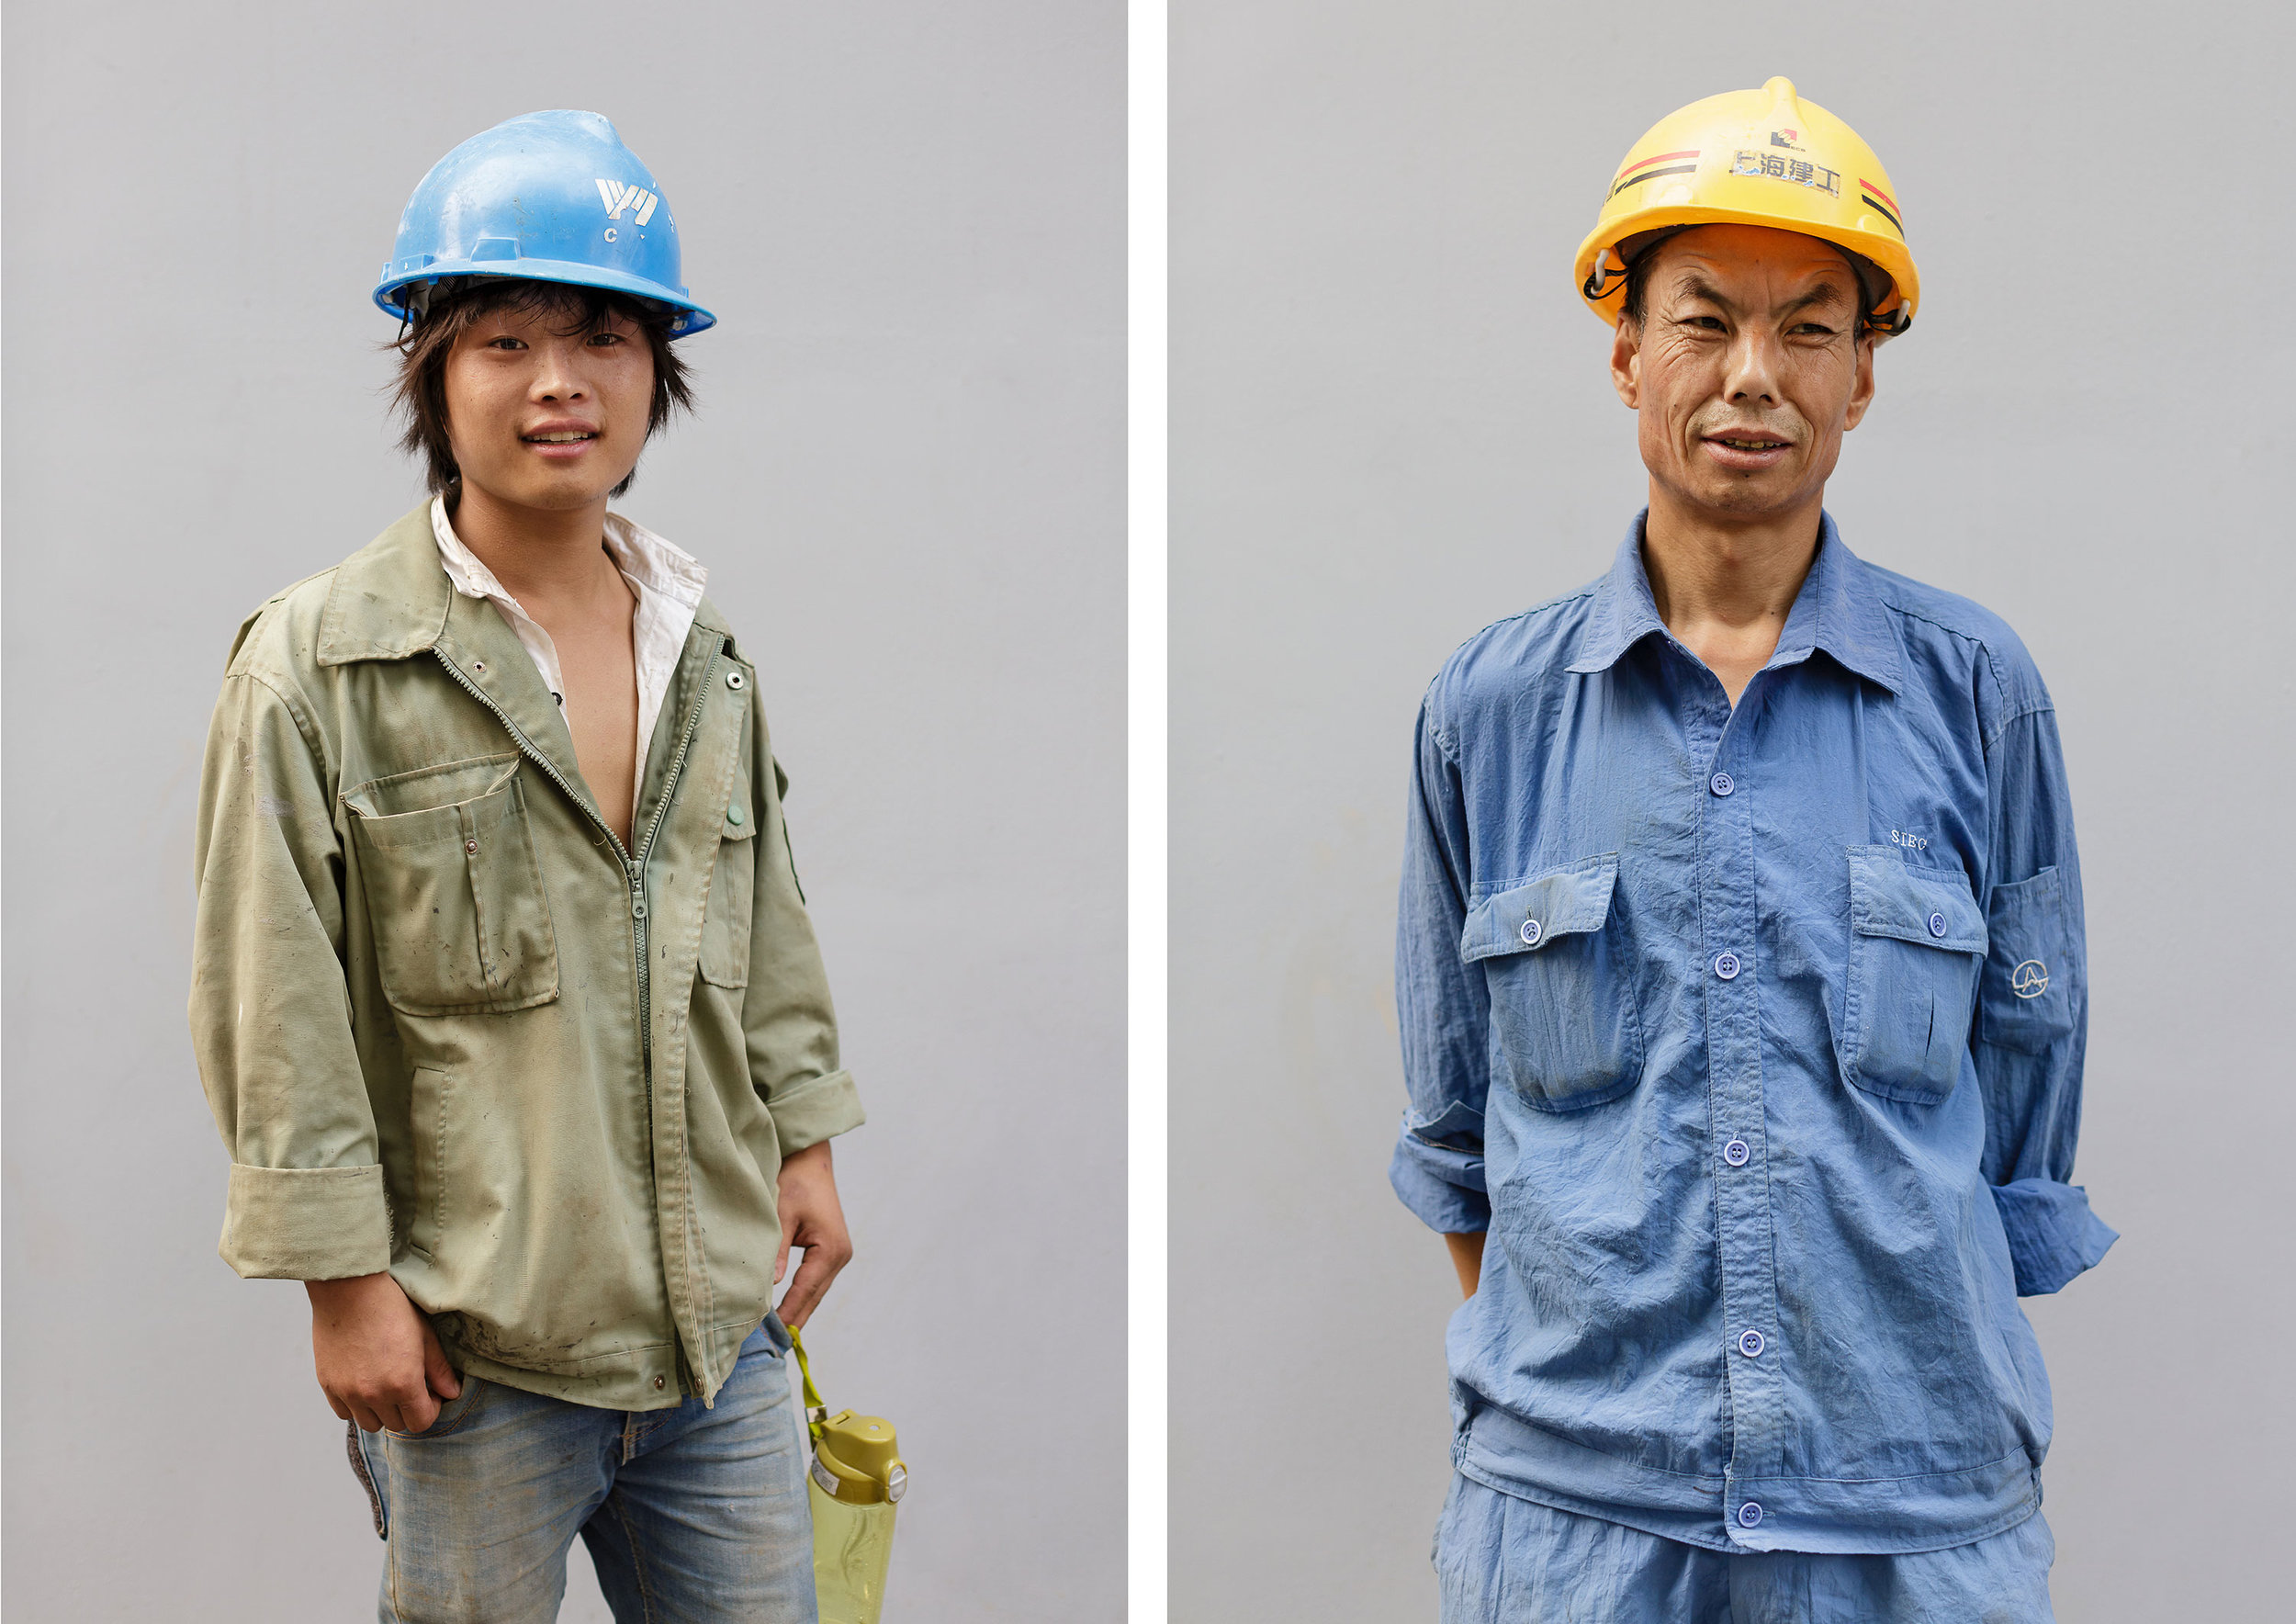 Shanghai_Tower-workers-and-building5.jpg